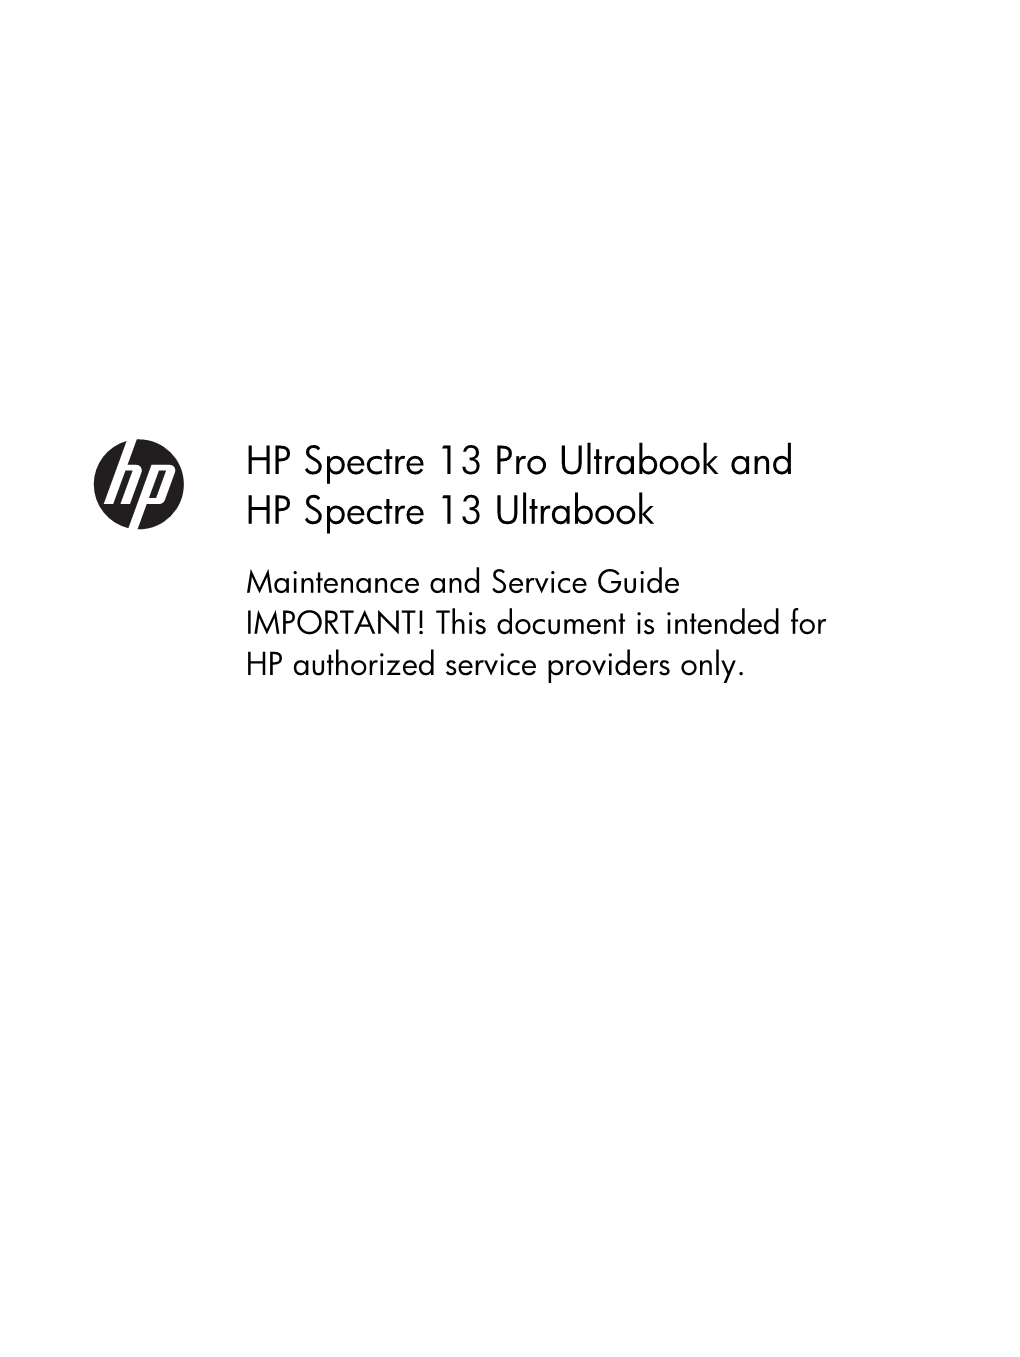 HP Spectre 13 Ultrabook